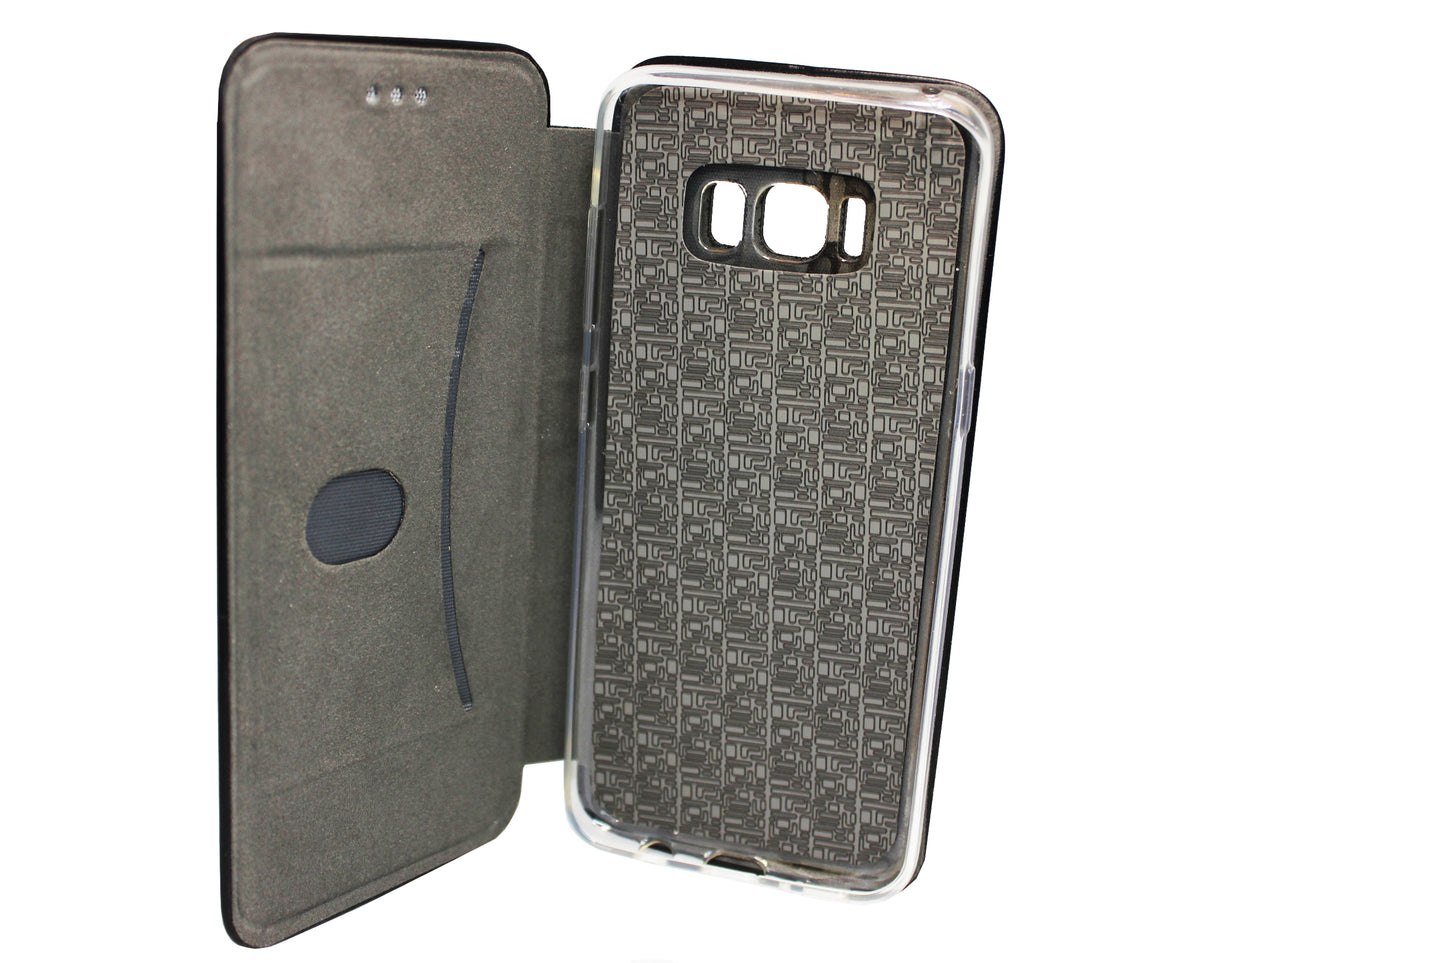 Husa Flip Cover leather pentru telefoane Huawei